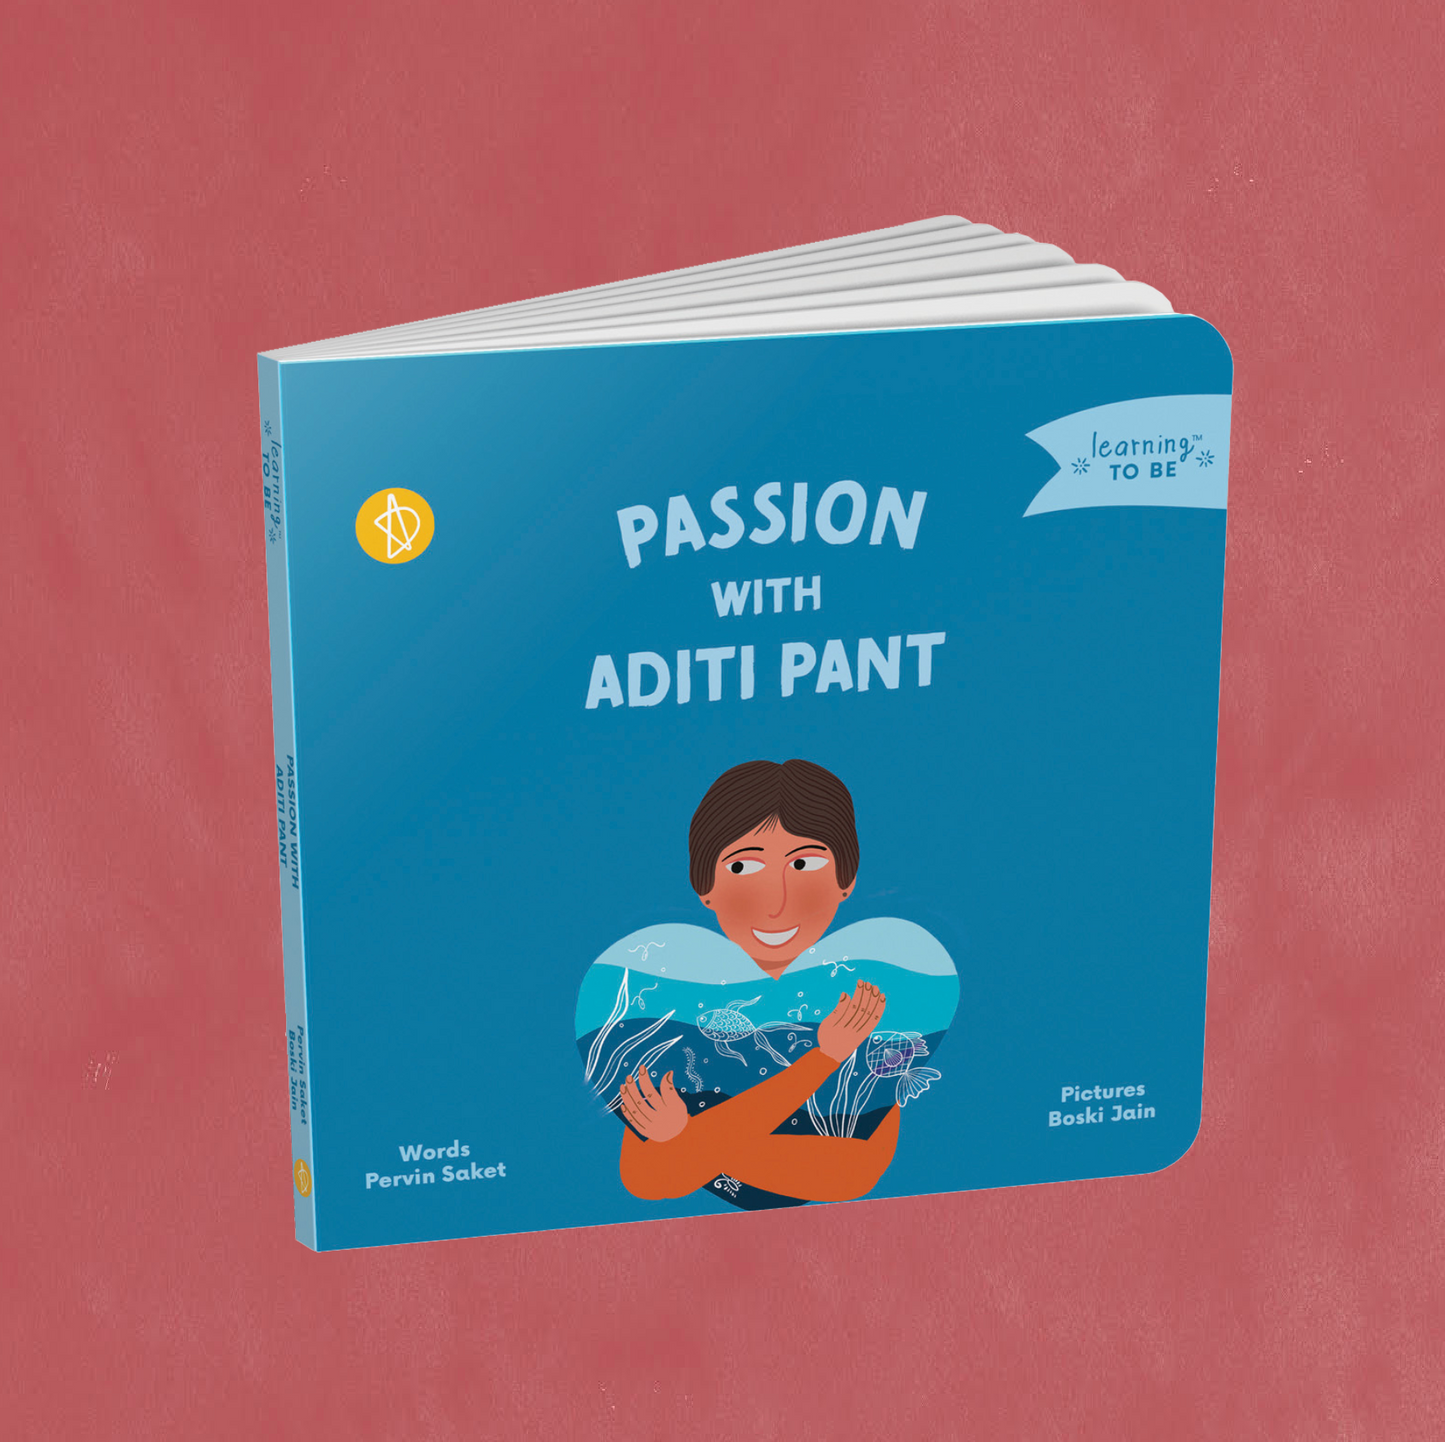 Passion with Aditi Pant by Adidev Press